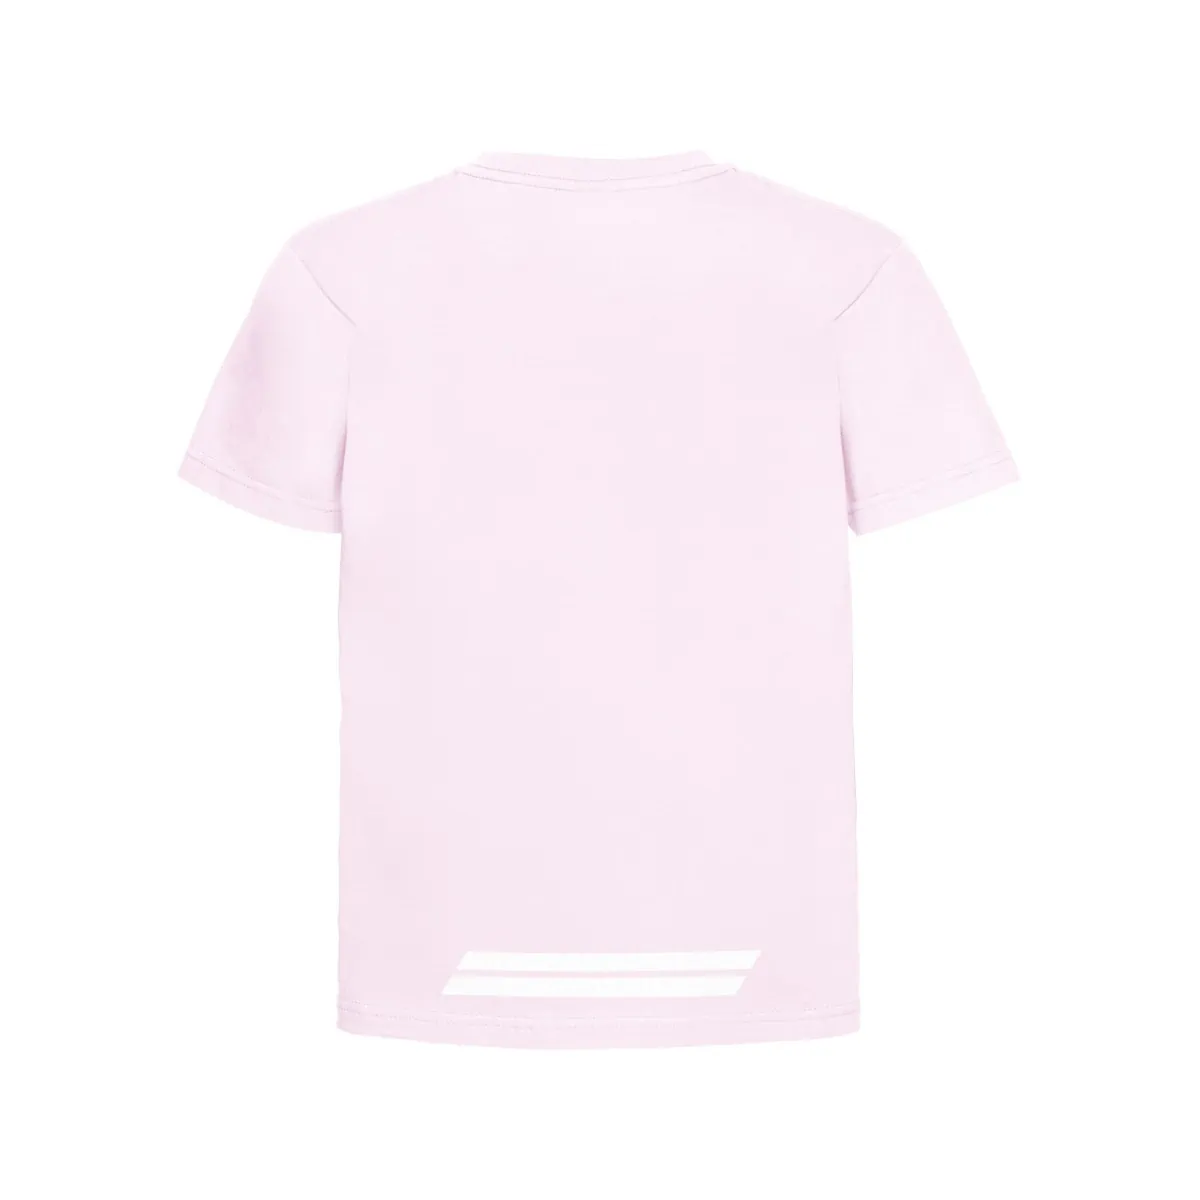 BLACKPINK Jennie Lisa Rosé Jisoo Kids T-Shirt, Pink/White